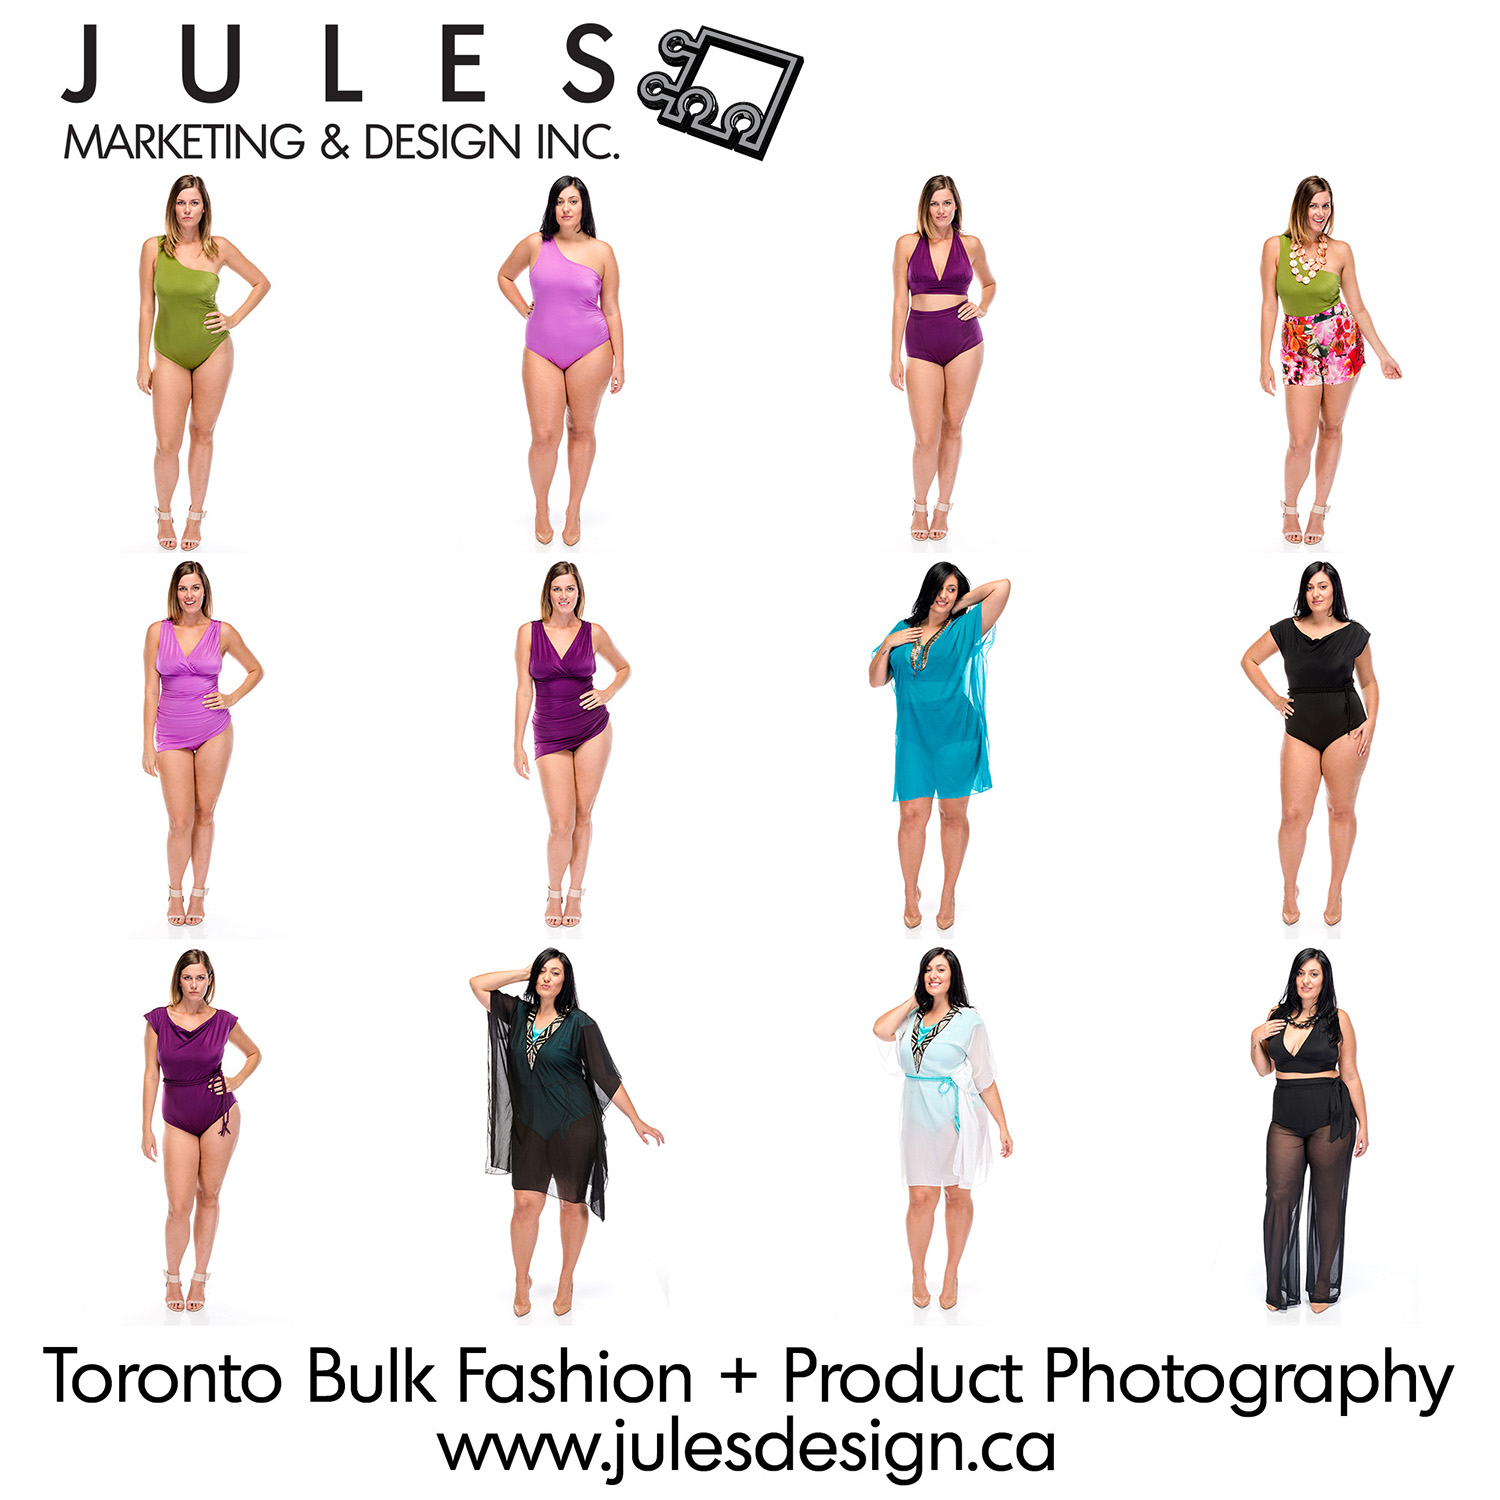 Toronto Bulk Product and Fashion photography